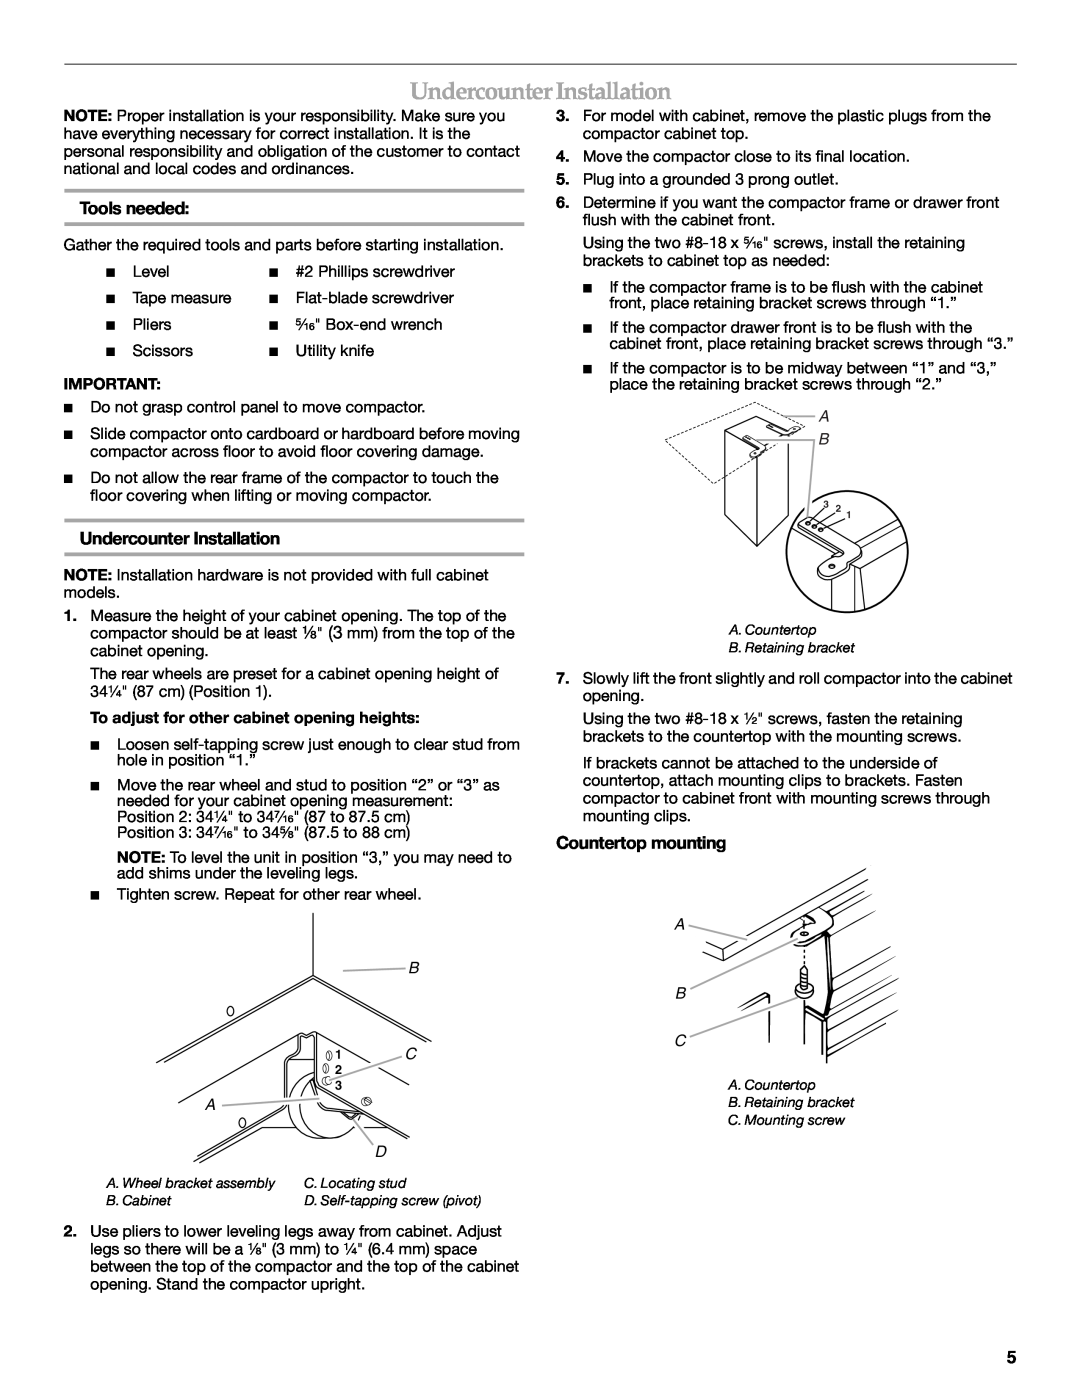 KitchenAid KUCS03FTSS, W10242569A manual Undercounter Installation, Tools needed, Countertop mounting 